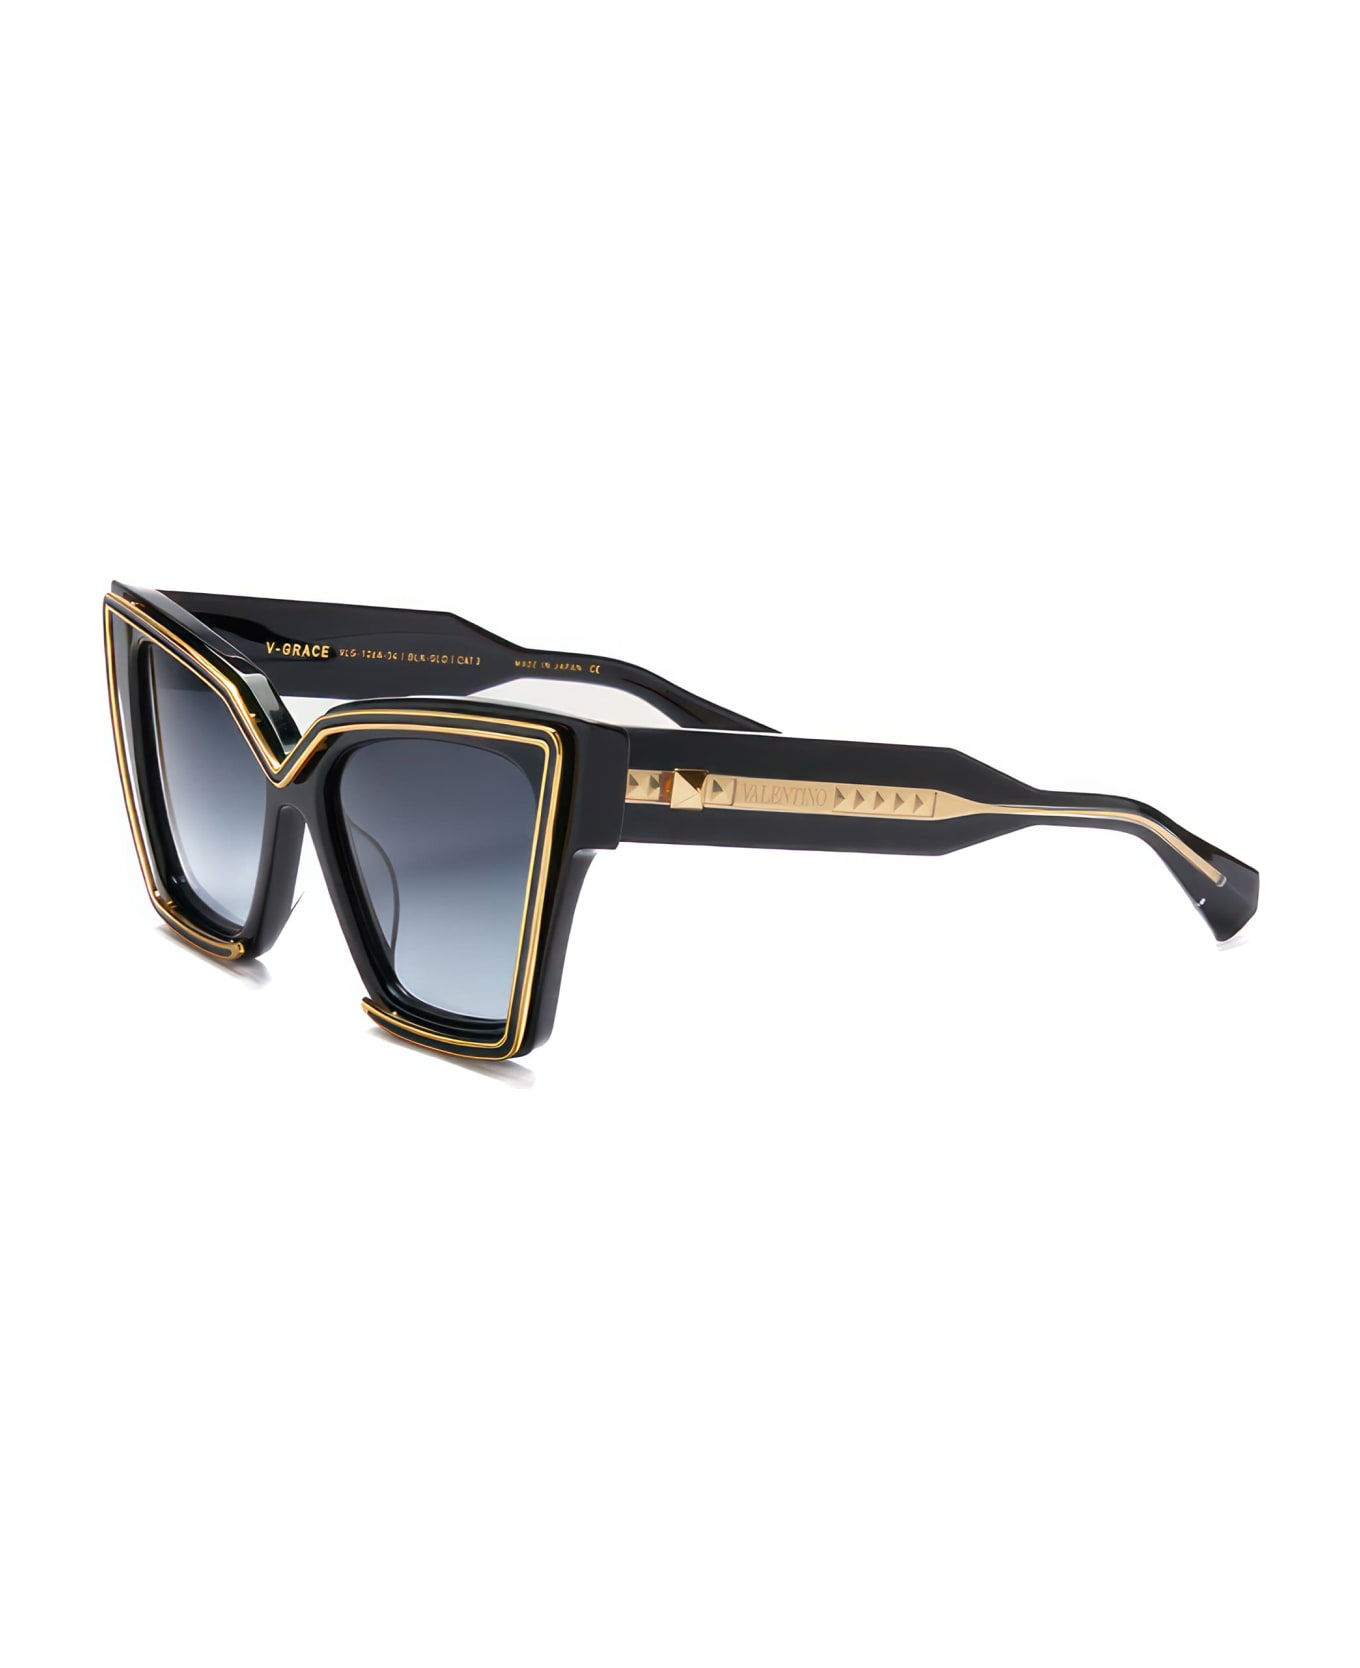 Valentino Eyewear V-grace - Black / Gold Sunglasses - Black